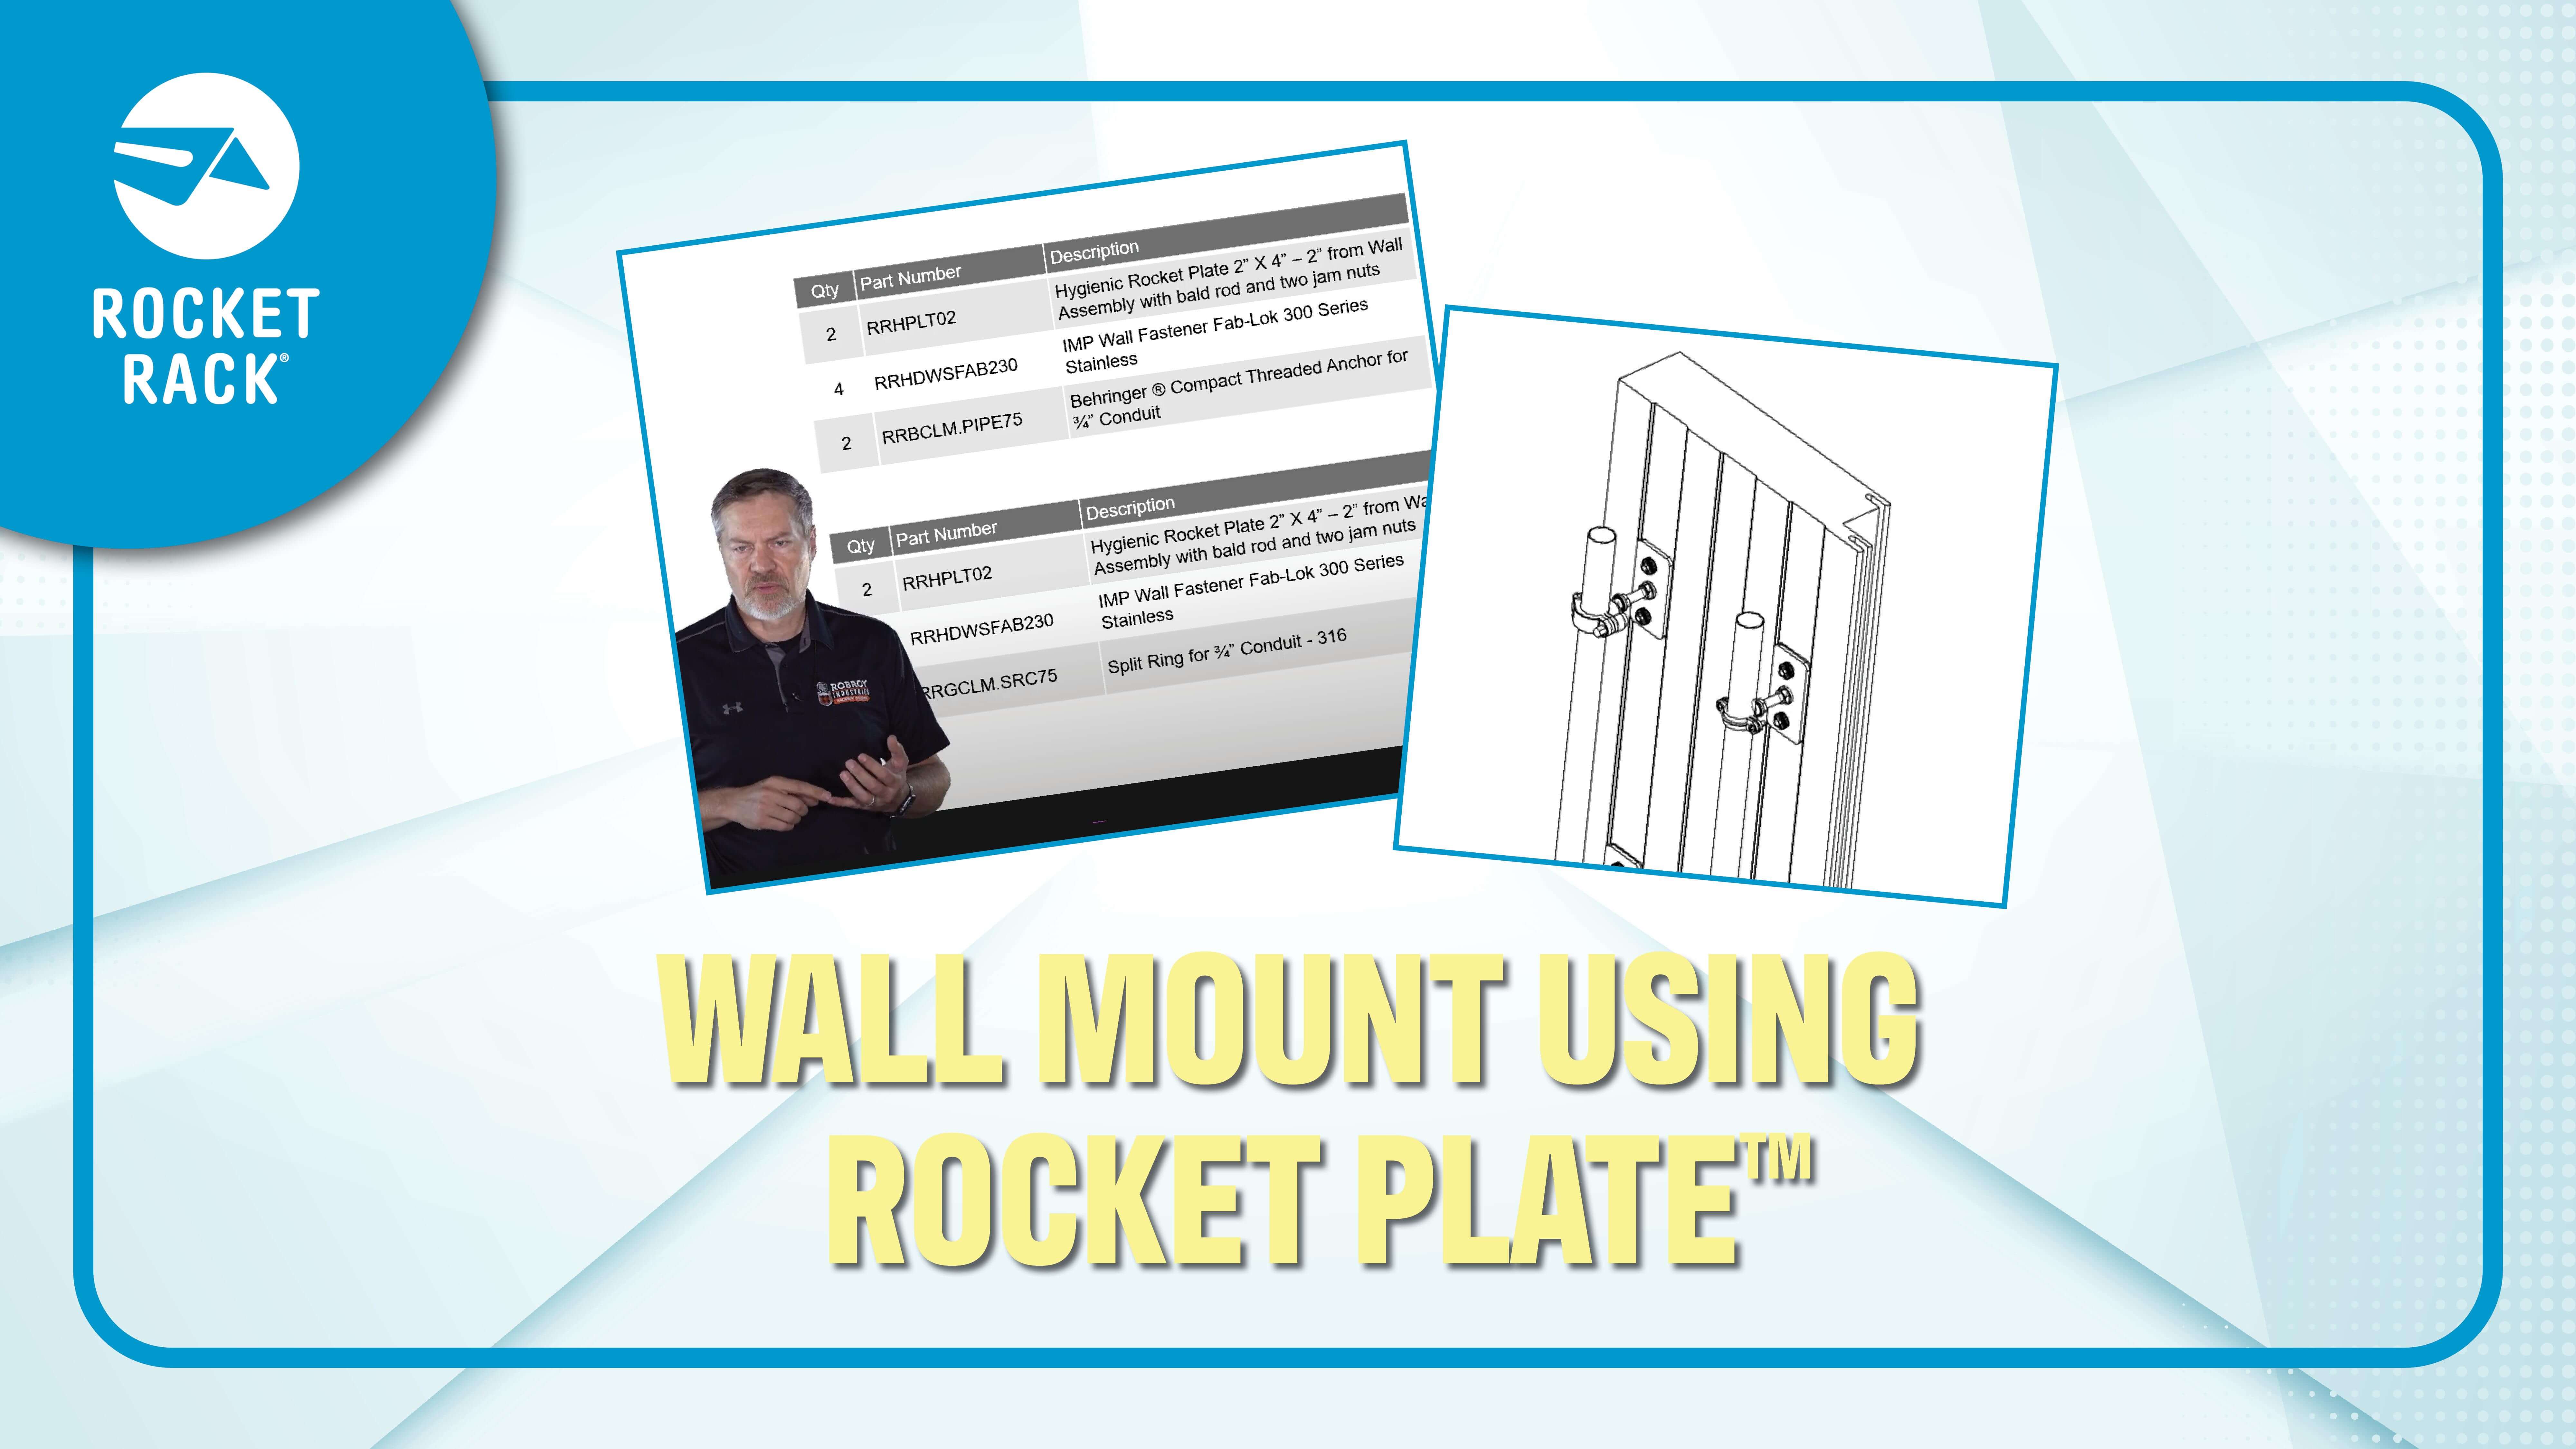 Wall Mount Using Rocket Plate